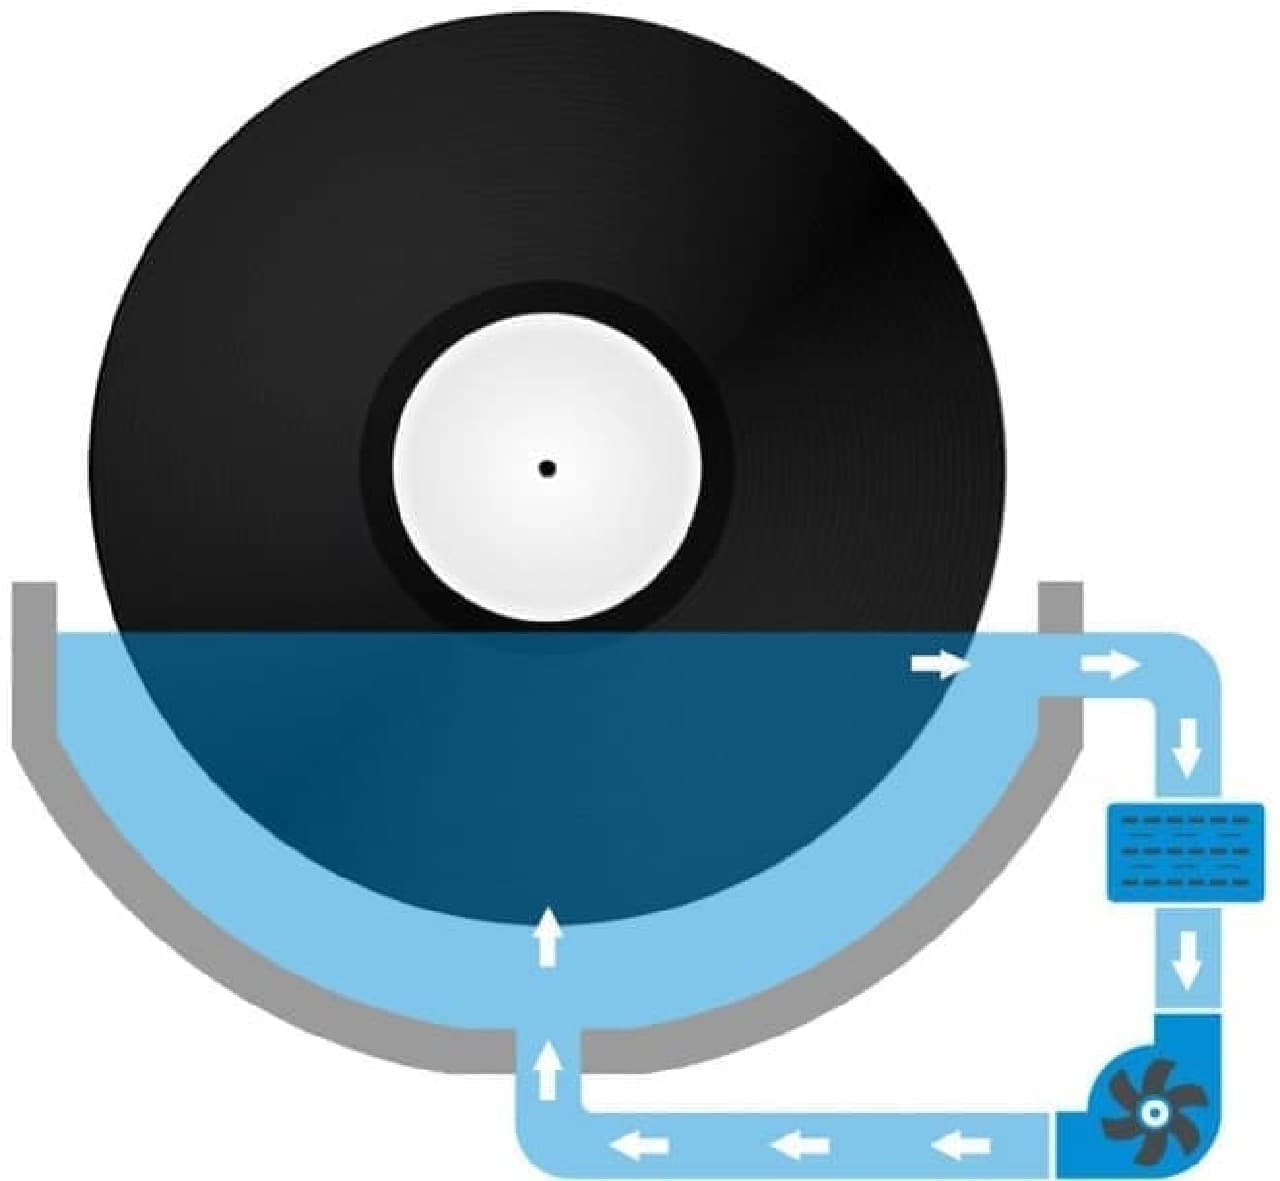 LPレコード専用の超音波洗浄器「Degritter」に洗浄力をアップしたプレミアムバージョン